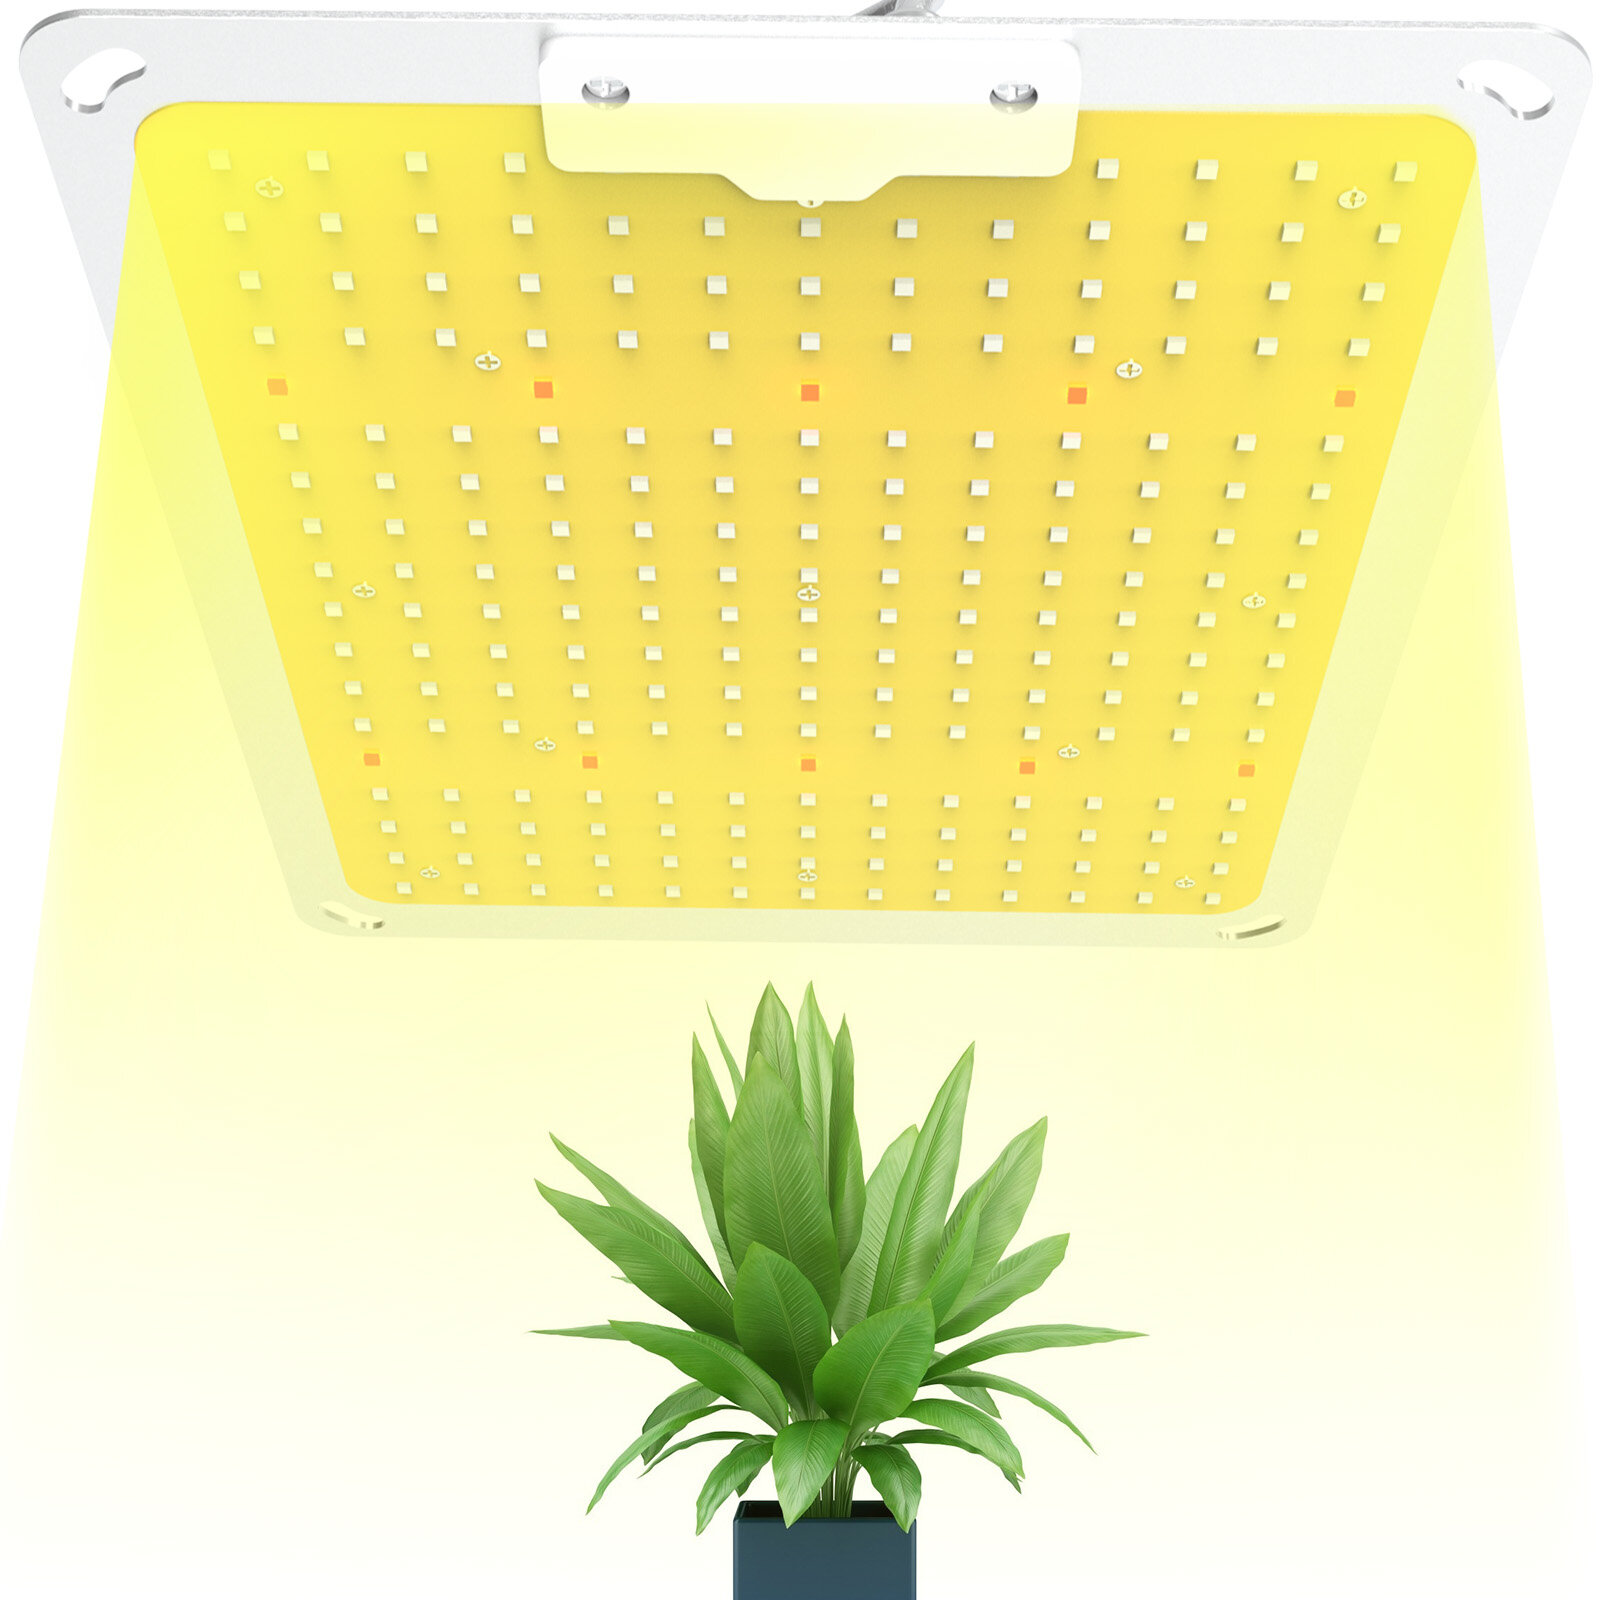 2X 80 LED Grow Light Bulb Indoor Plants Growing Lights Full Spectrum Flower Lamp 